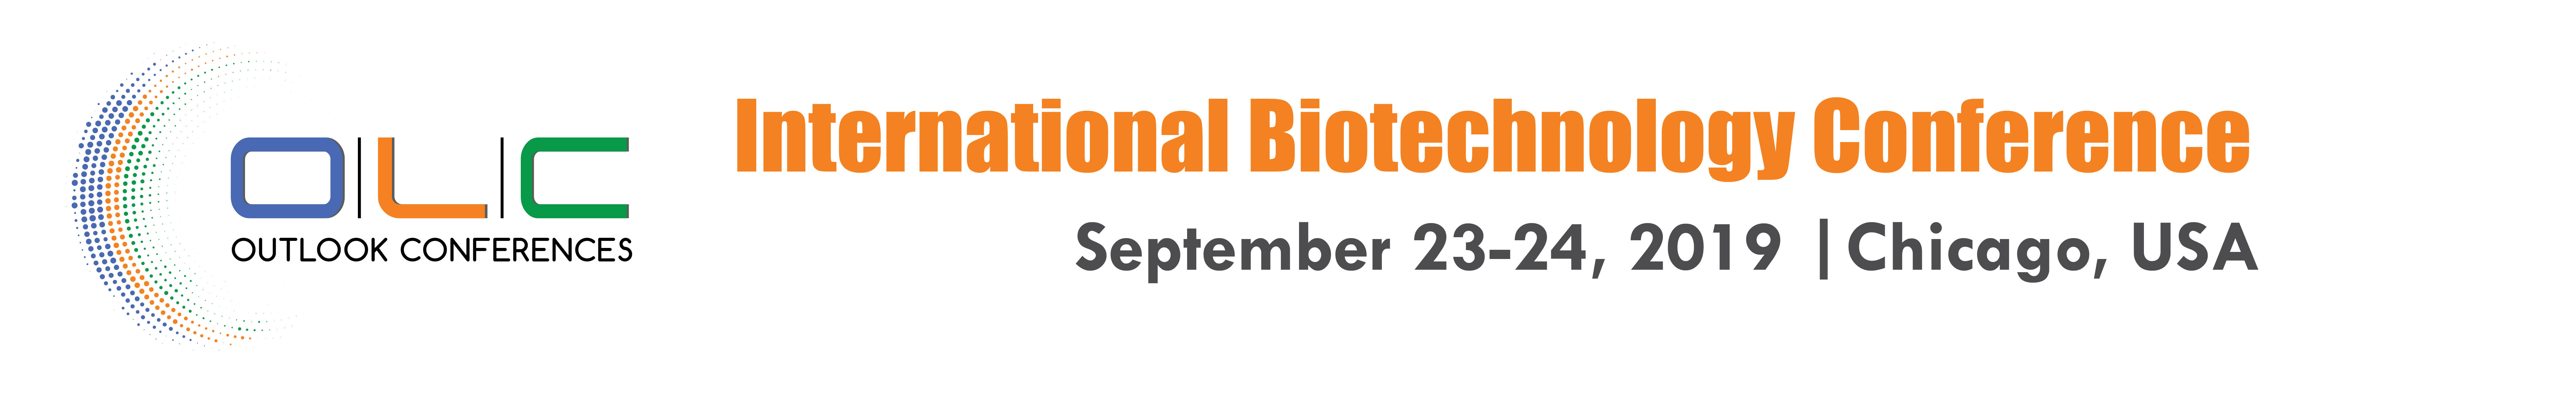 International Biotechnology Conference